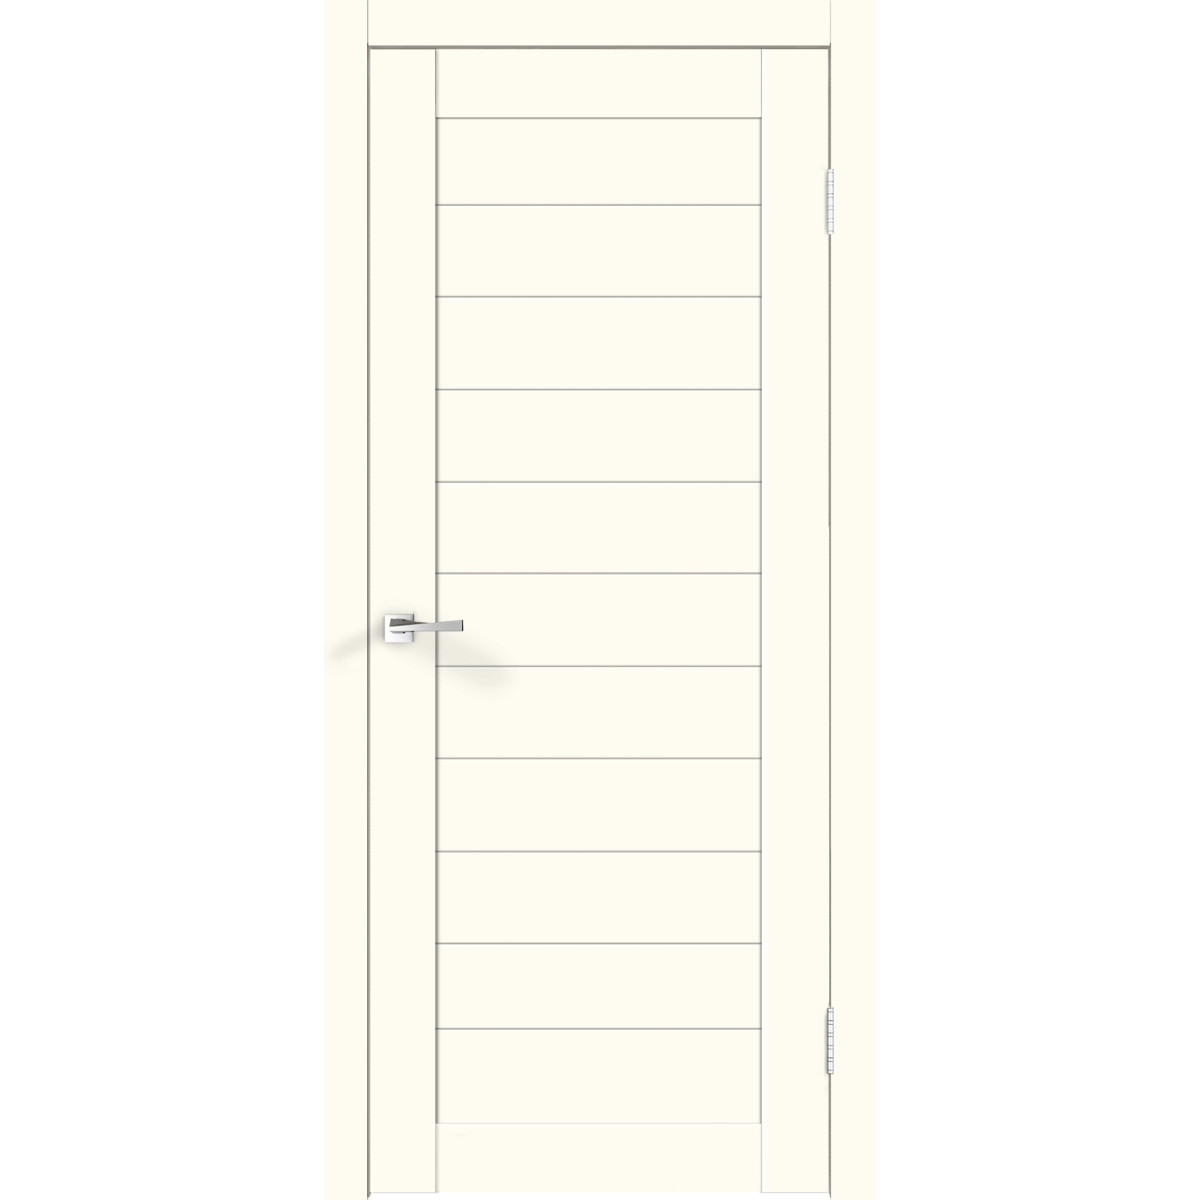 Дверь межкомнатная под покраску Симпл 70х200 см с фурнитурой, цвет белый